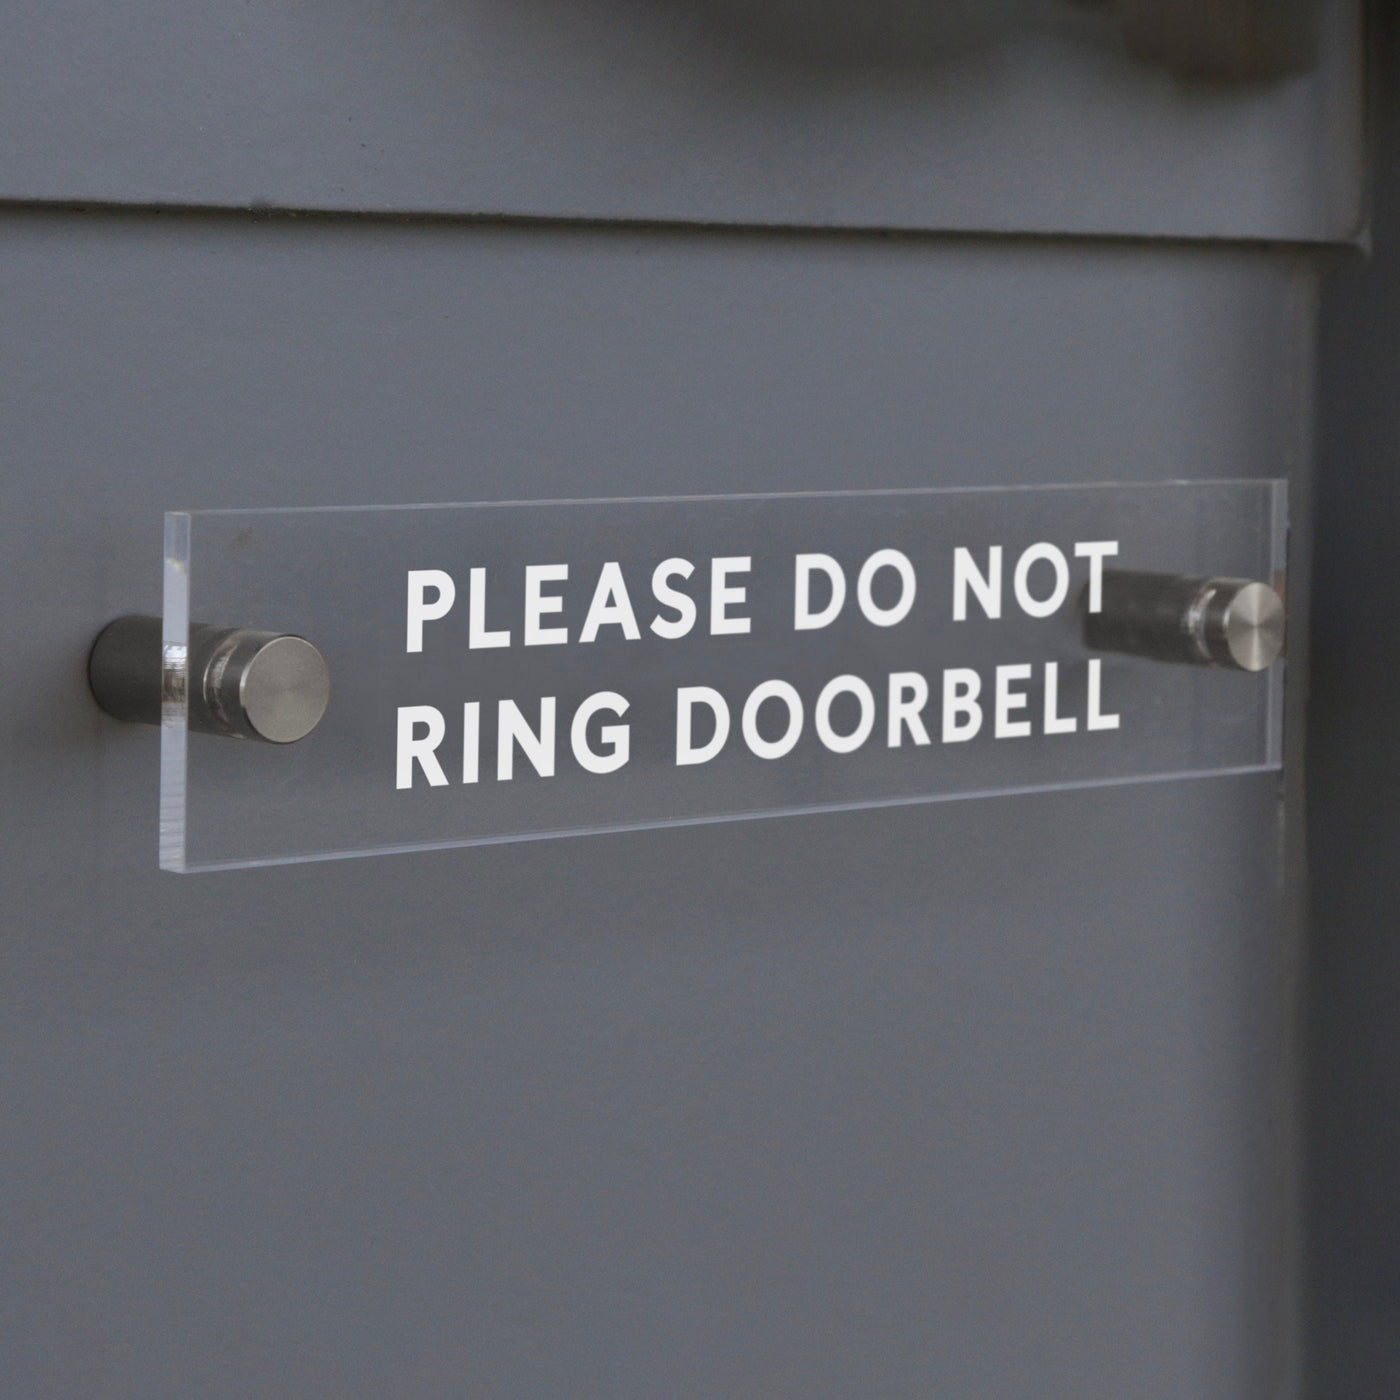 Please Do Not Ring Doorbell sign